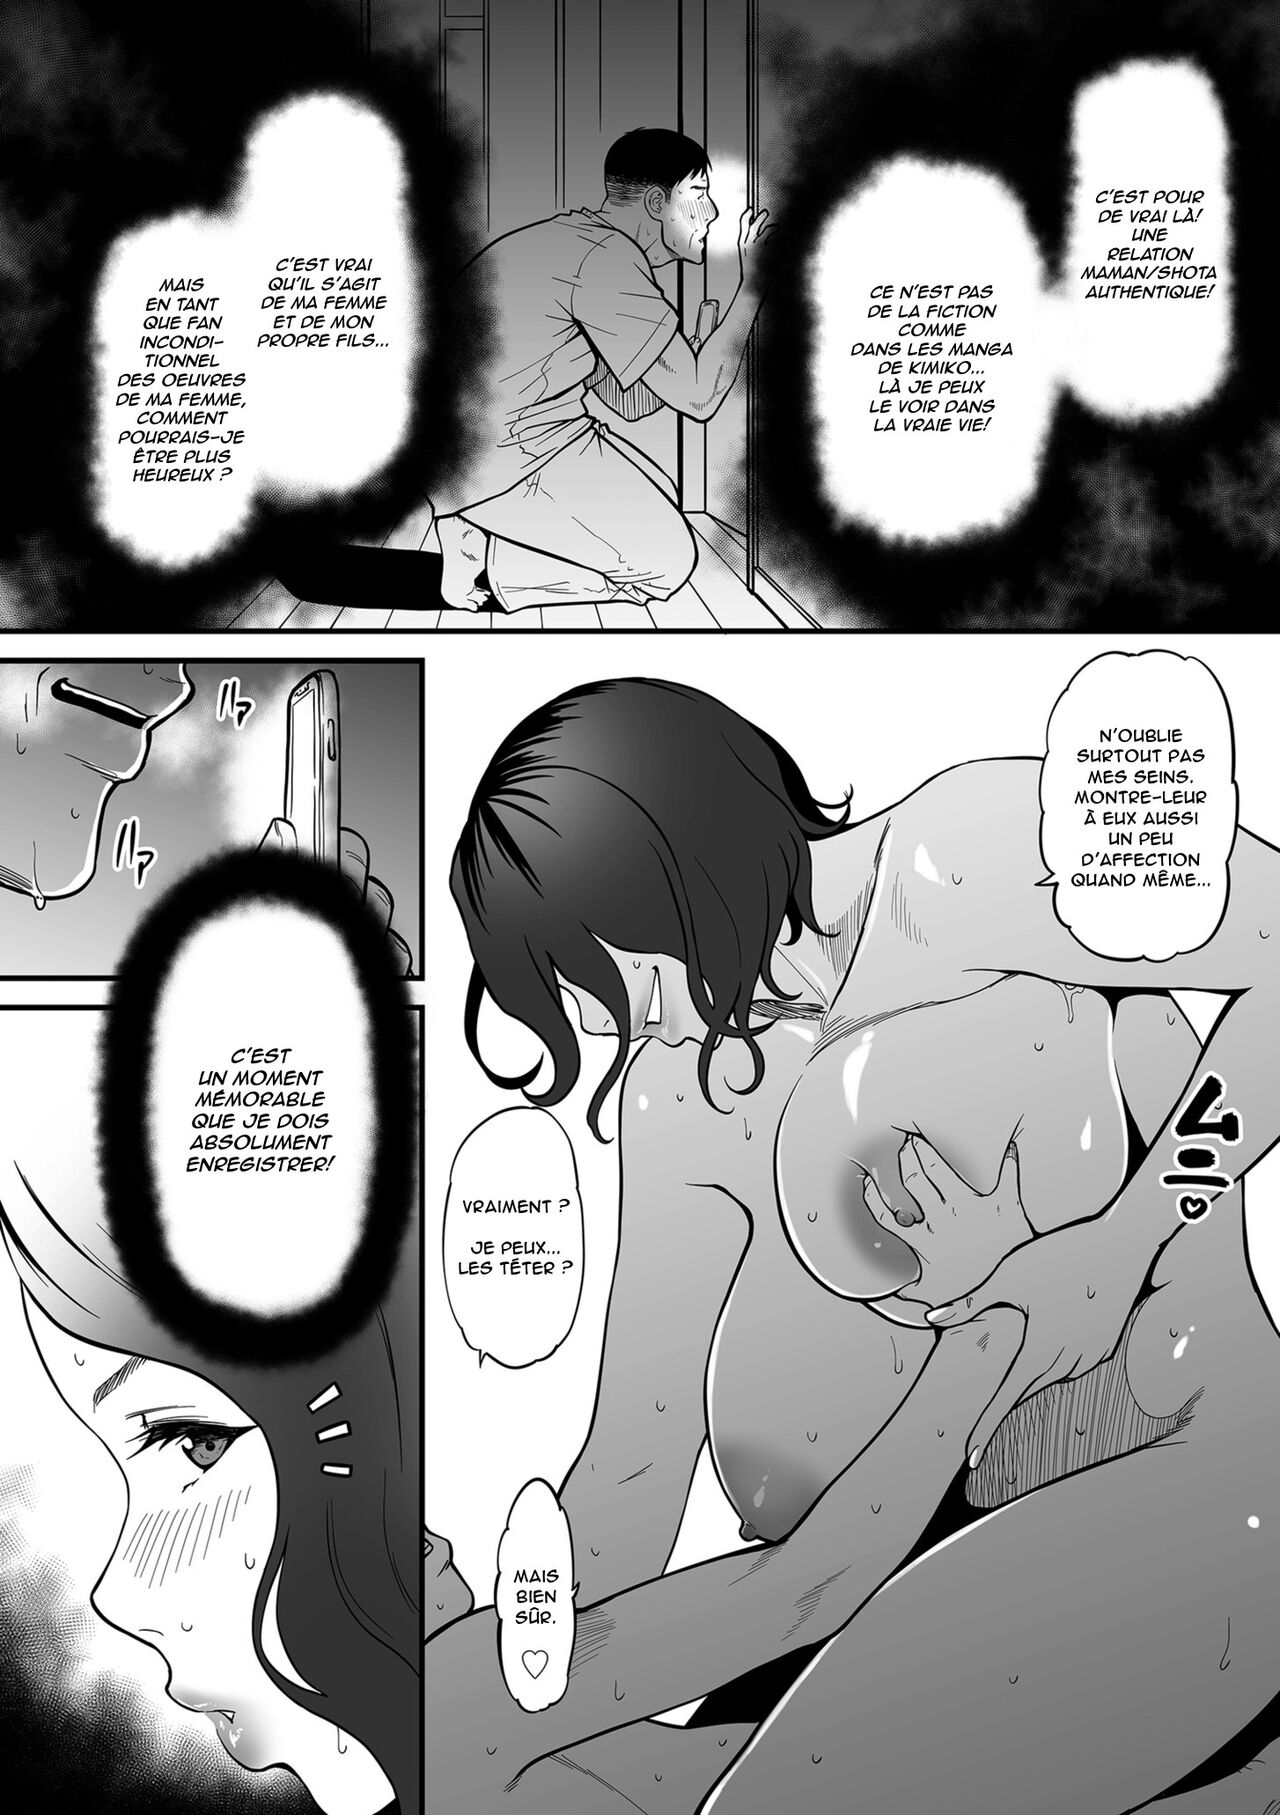 Onna Eromangaka ga Inran da nante Gensou ja nai?  Is It Not a Fantasy That The Female Erotic Mangaka Is a Pervert? numero d'image 127